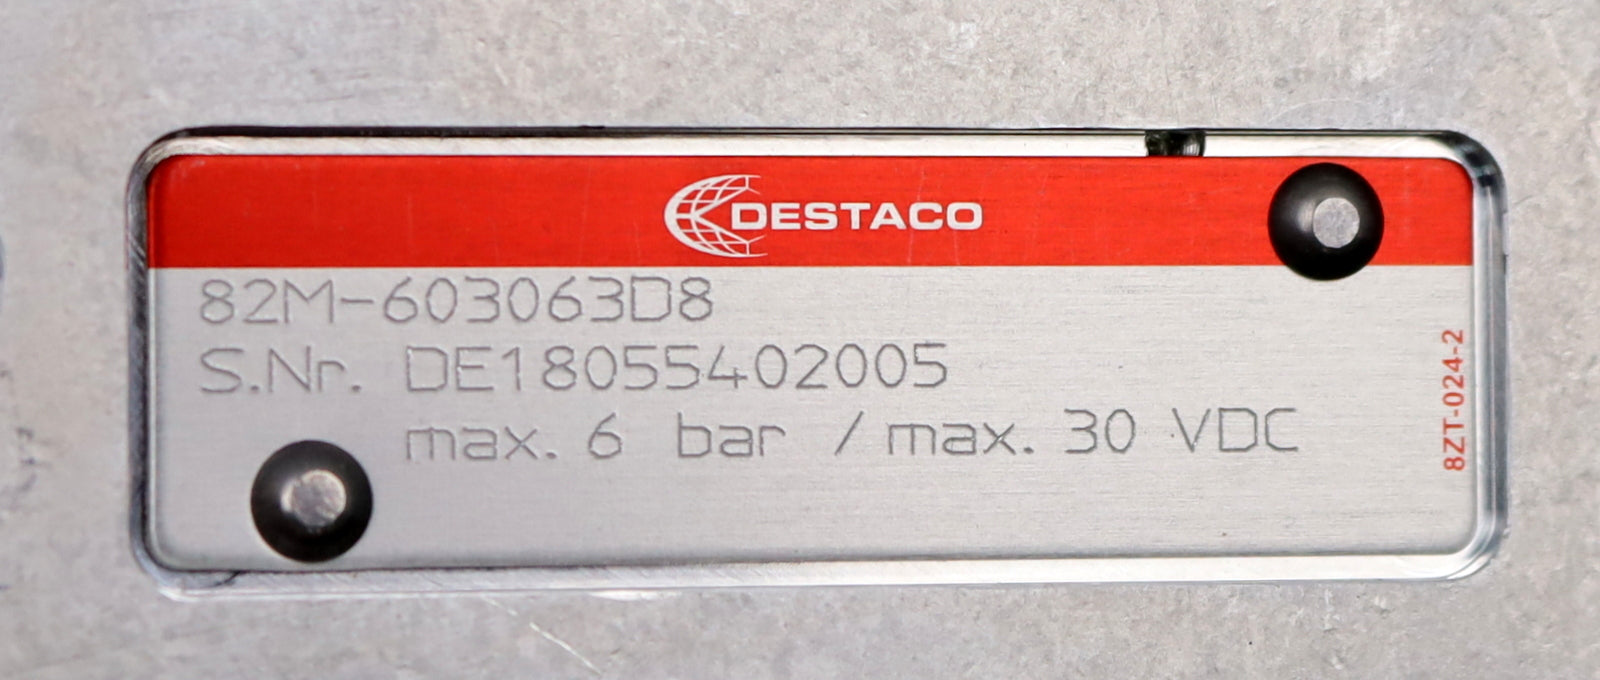 Bild des Artikels DESTACO-Automations-Kraftspanner-82M-603063D8-FA-Nr.:-5402005-Haltemoment-1000Nm